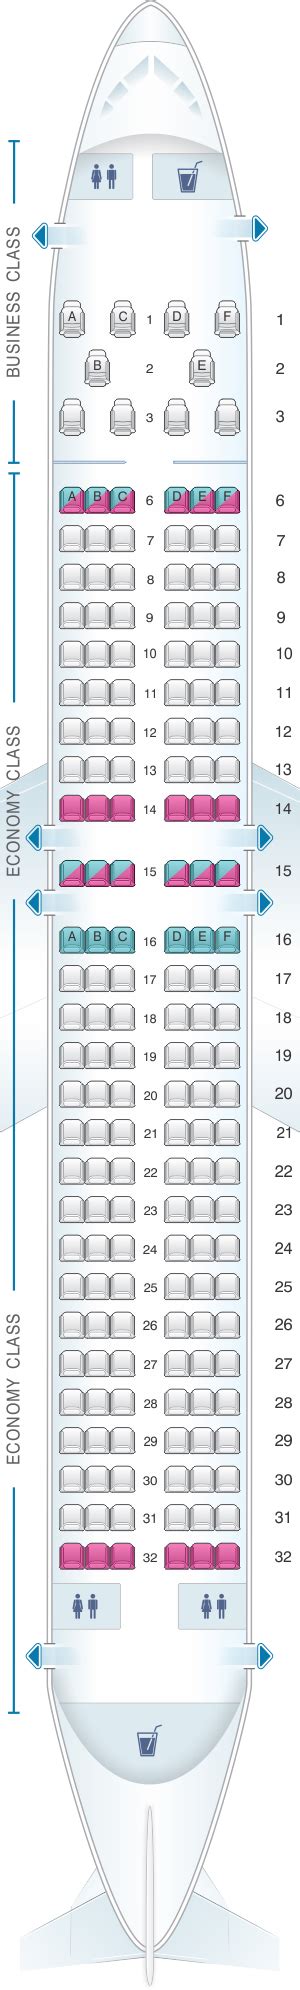 united  seating chart